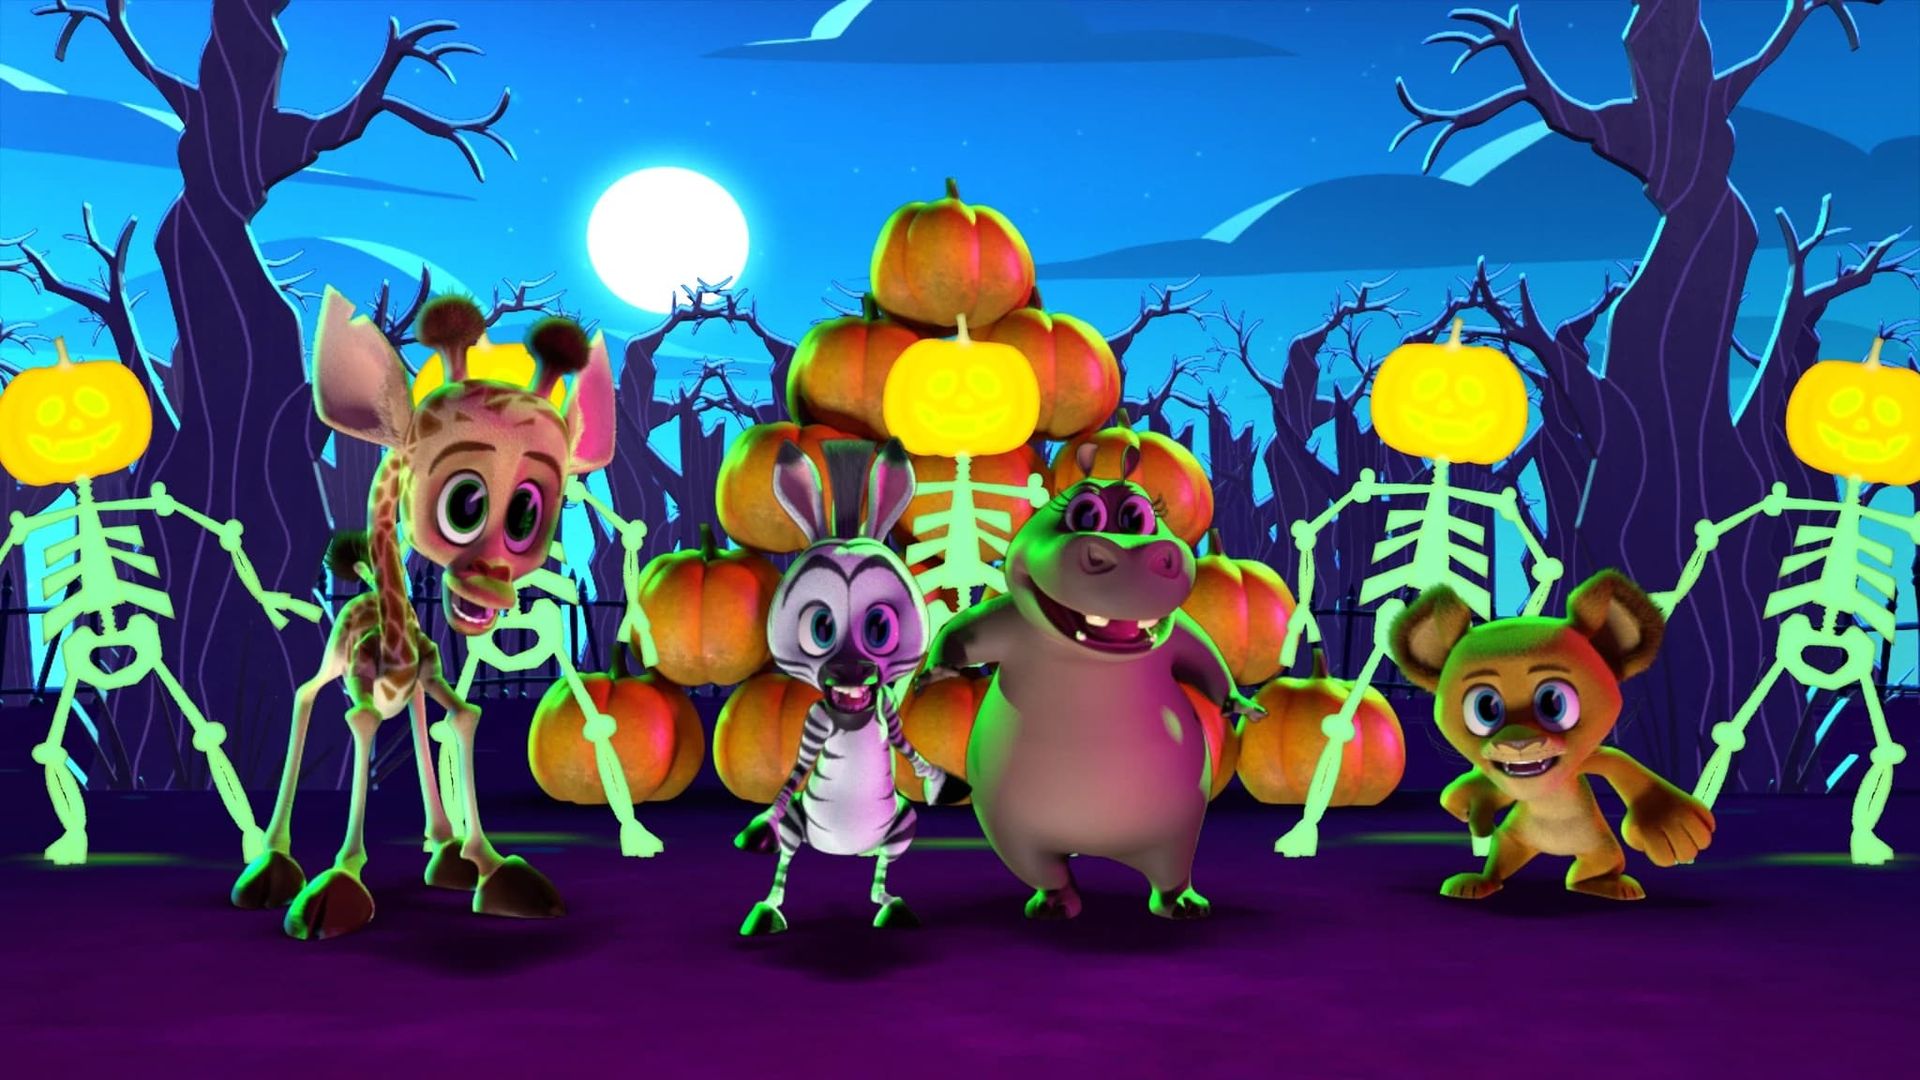 A Fang-tastic Halloween Backdrop